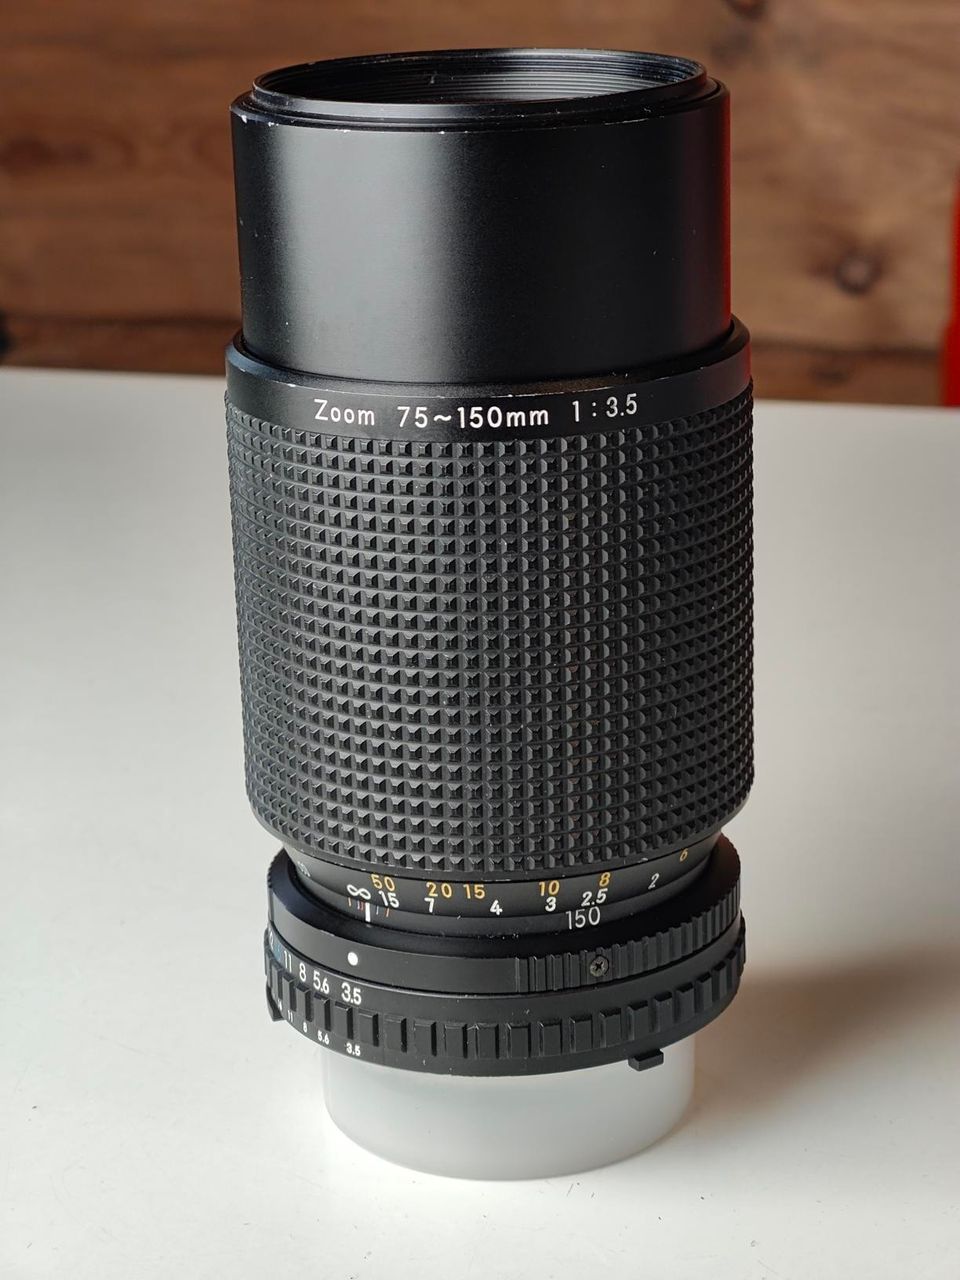 Nikon 75-150mm 1:3.5 Zoom